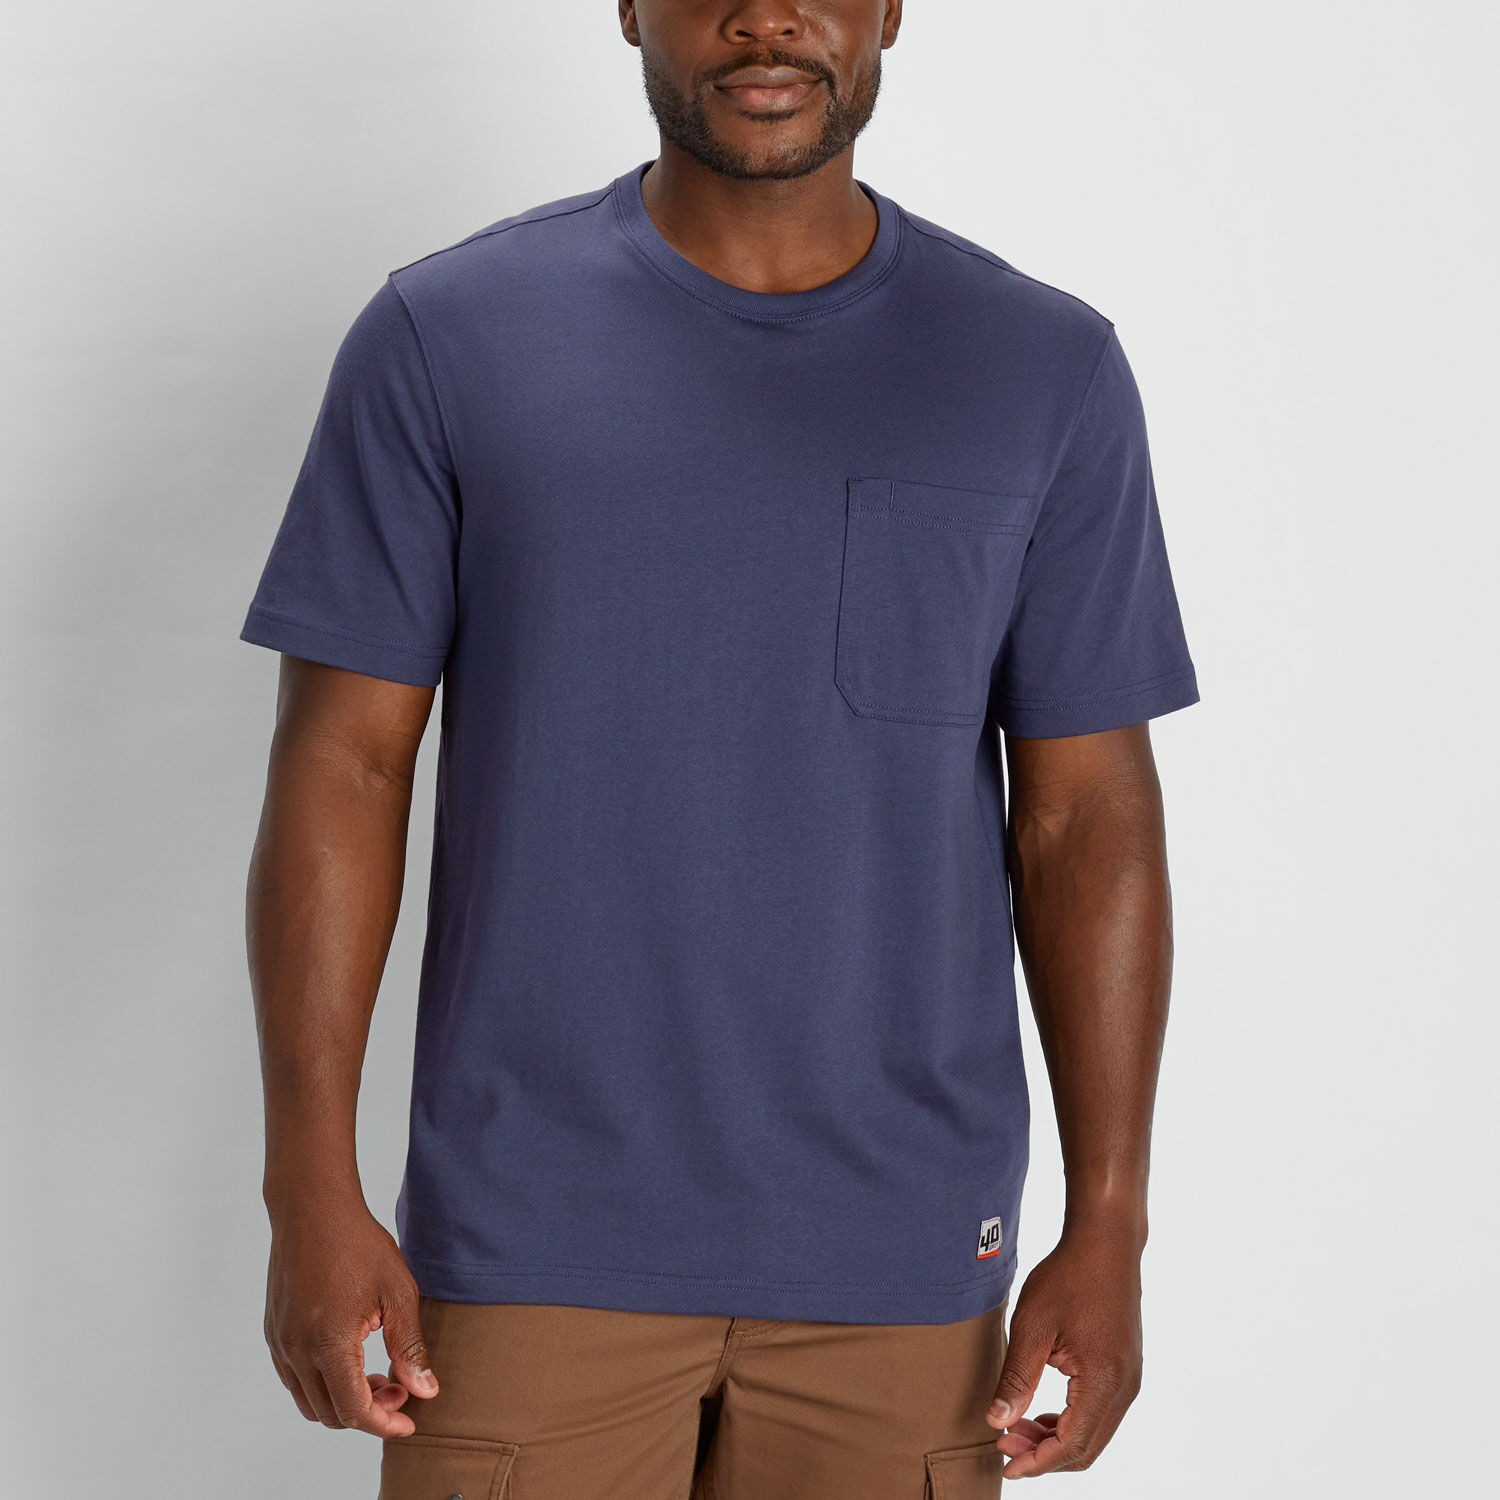 Men's 40 Grit Standard Work Short Sleeve T-Shirt with Pocket